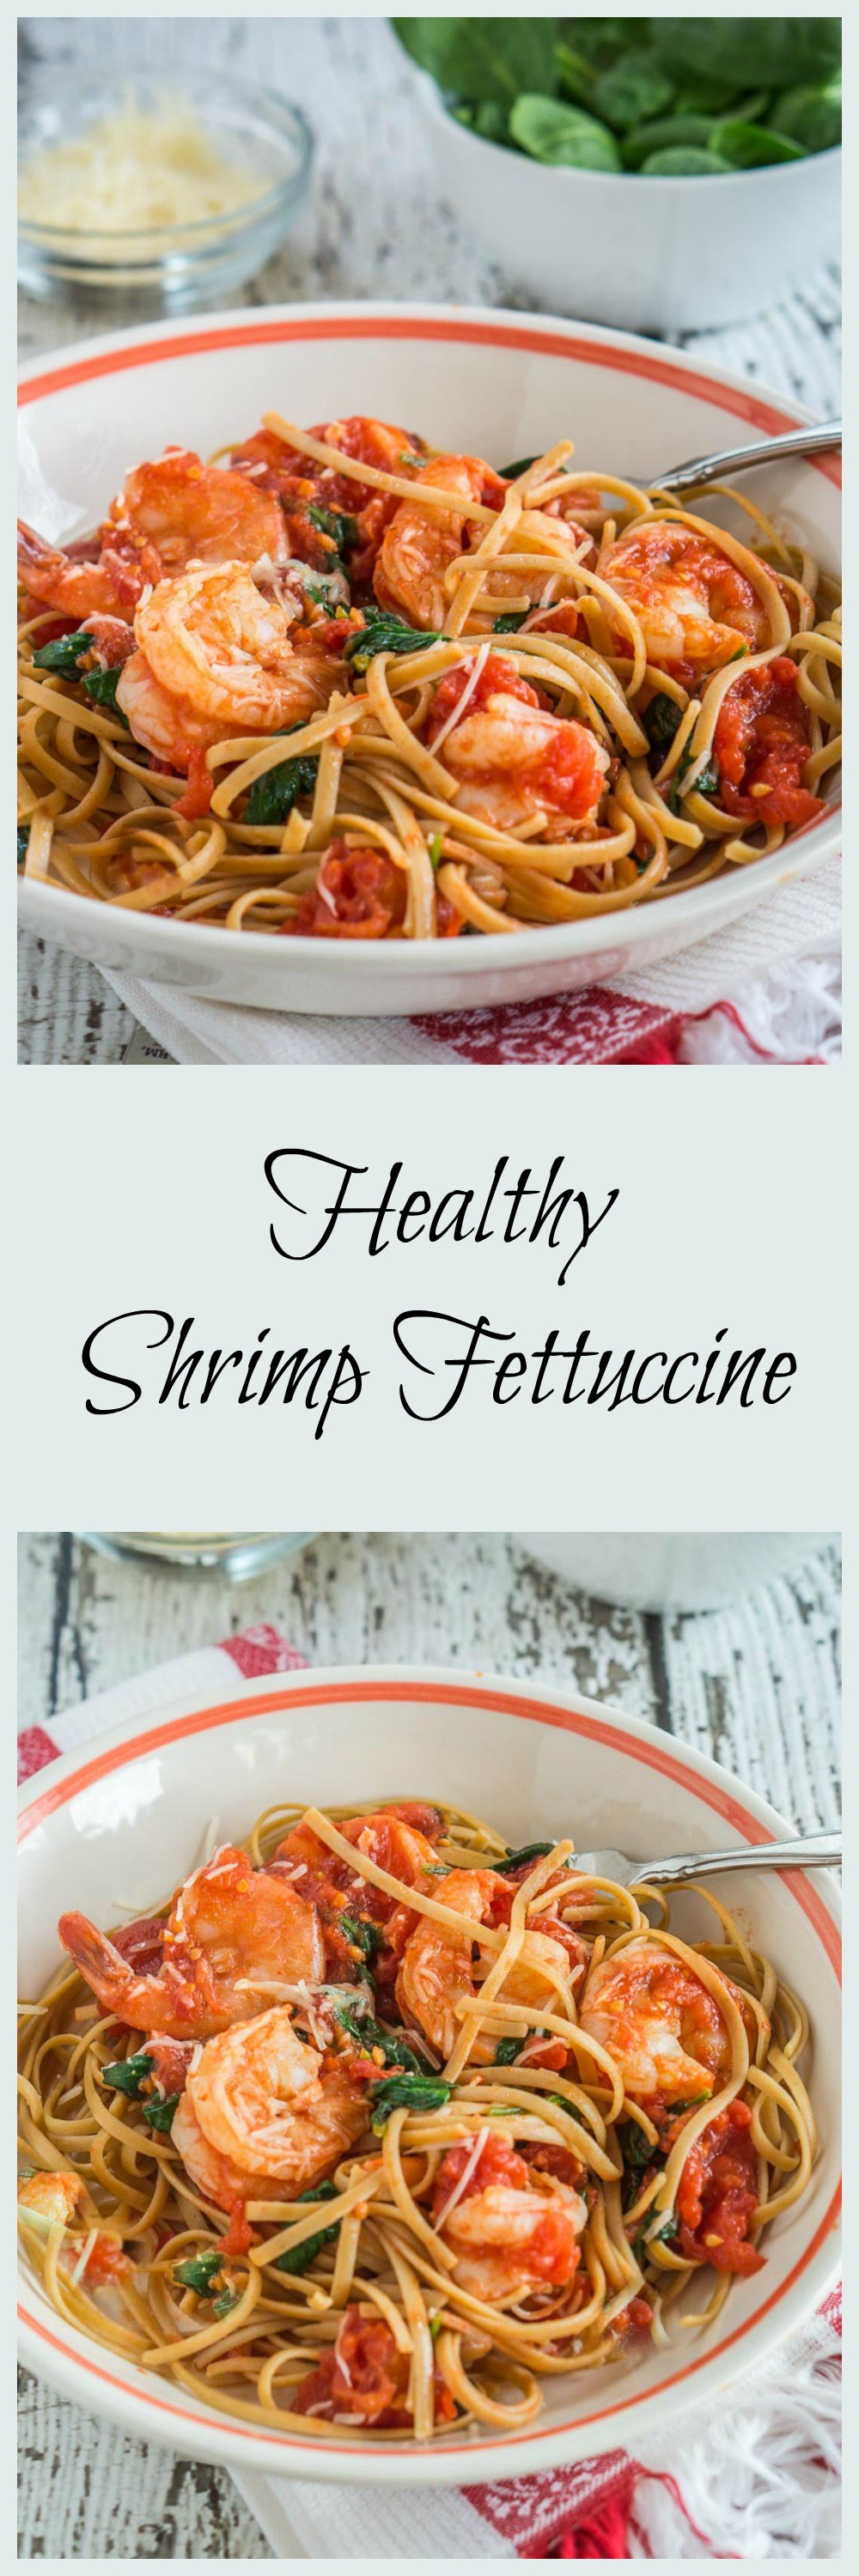 Heart Healthy Shrimp Recipes
 Healthy Shrimp Fettuccine Recipe